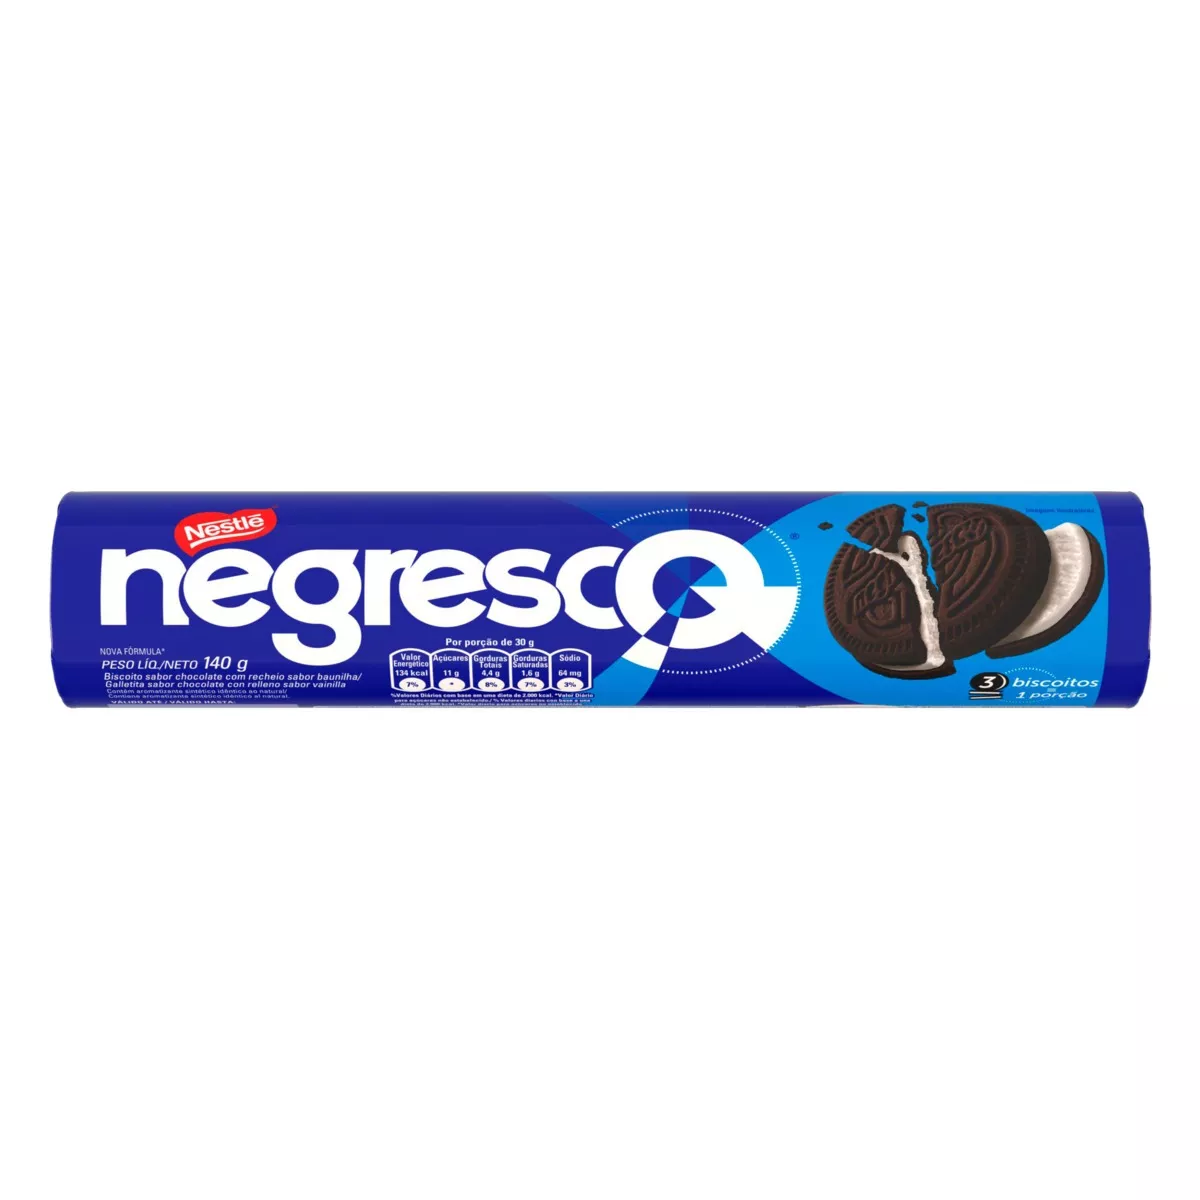 Biscoito Chocolate Recheio Baunilha Negresco Pacote 140g